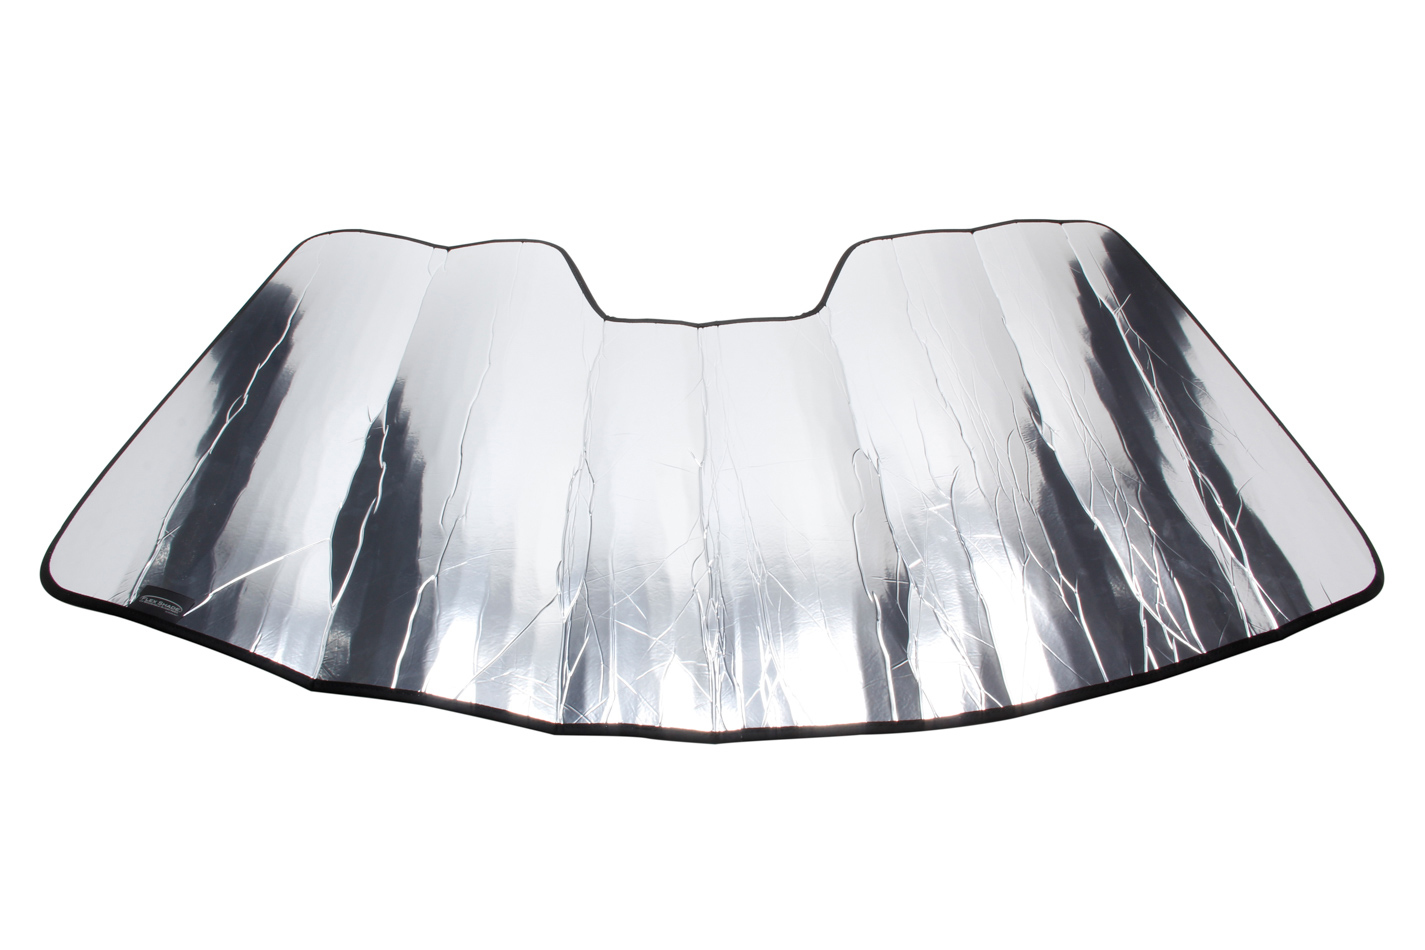 Covercraft Windshield Shade, Flex-Shade, Folding, Cloth/Plastic, Silver/Black, Chevy Camaro 2010-15, Each